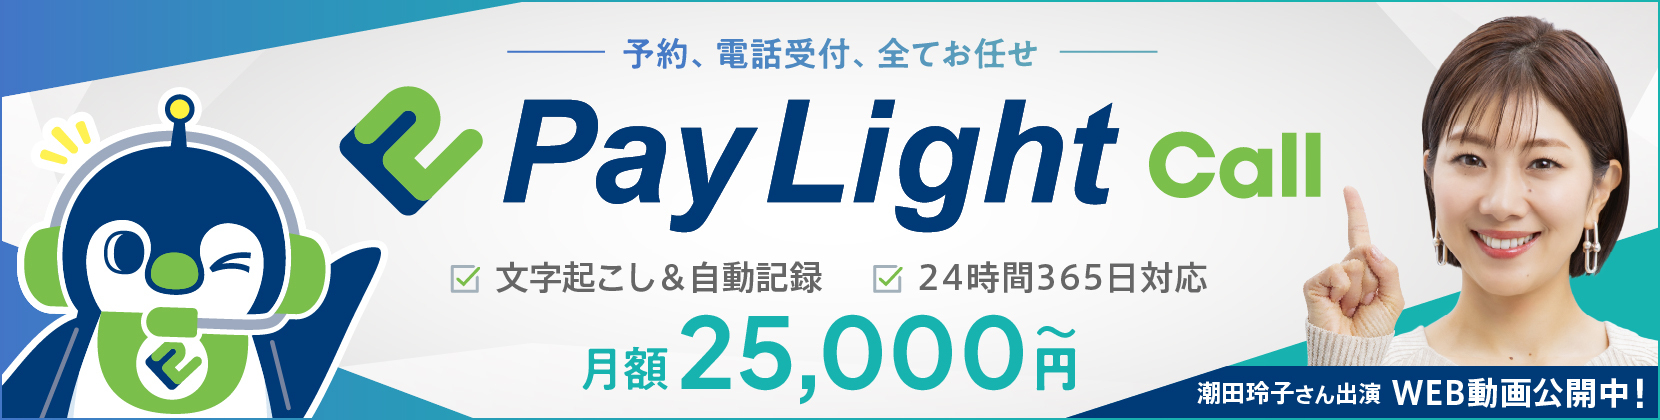 Pay Light Call